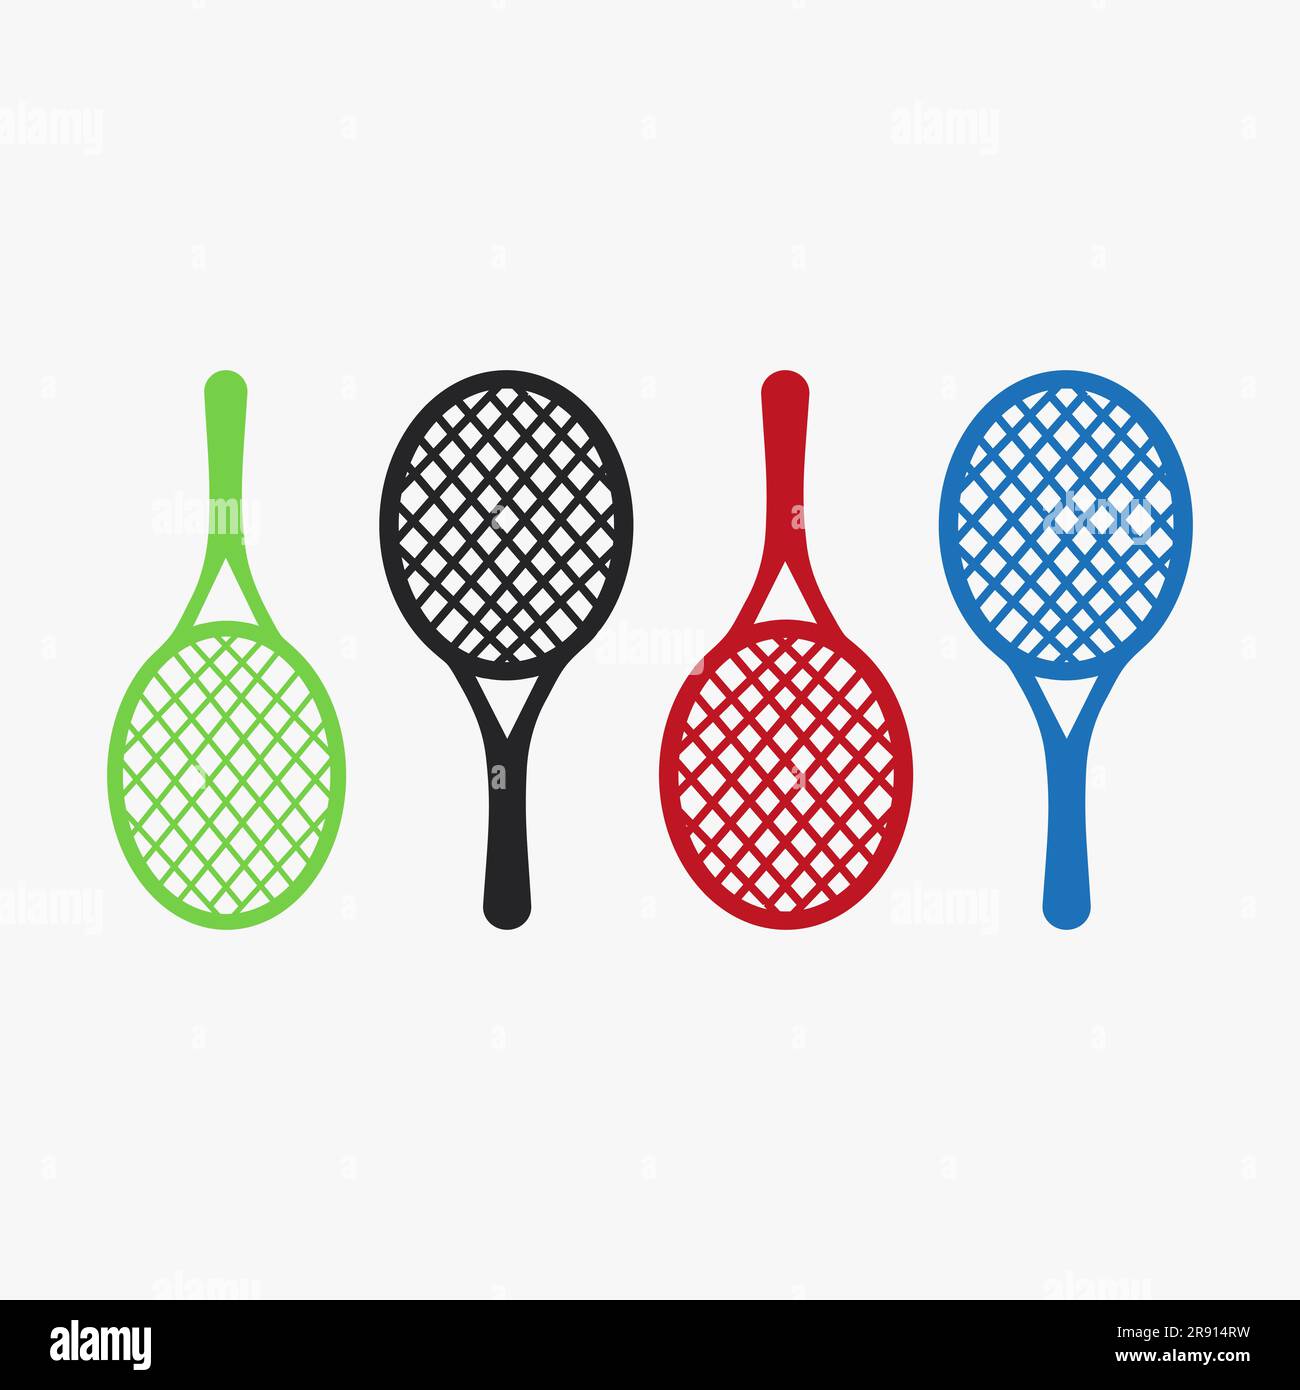 balles Squash / balles Tennis / balles Padel / balles Tennis de table –  NICE SMASH – Magasin de Tennis, de Squash, de Padel, Badminton, Ping à Nice